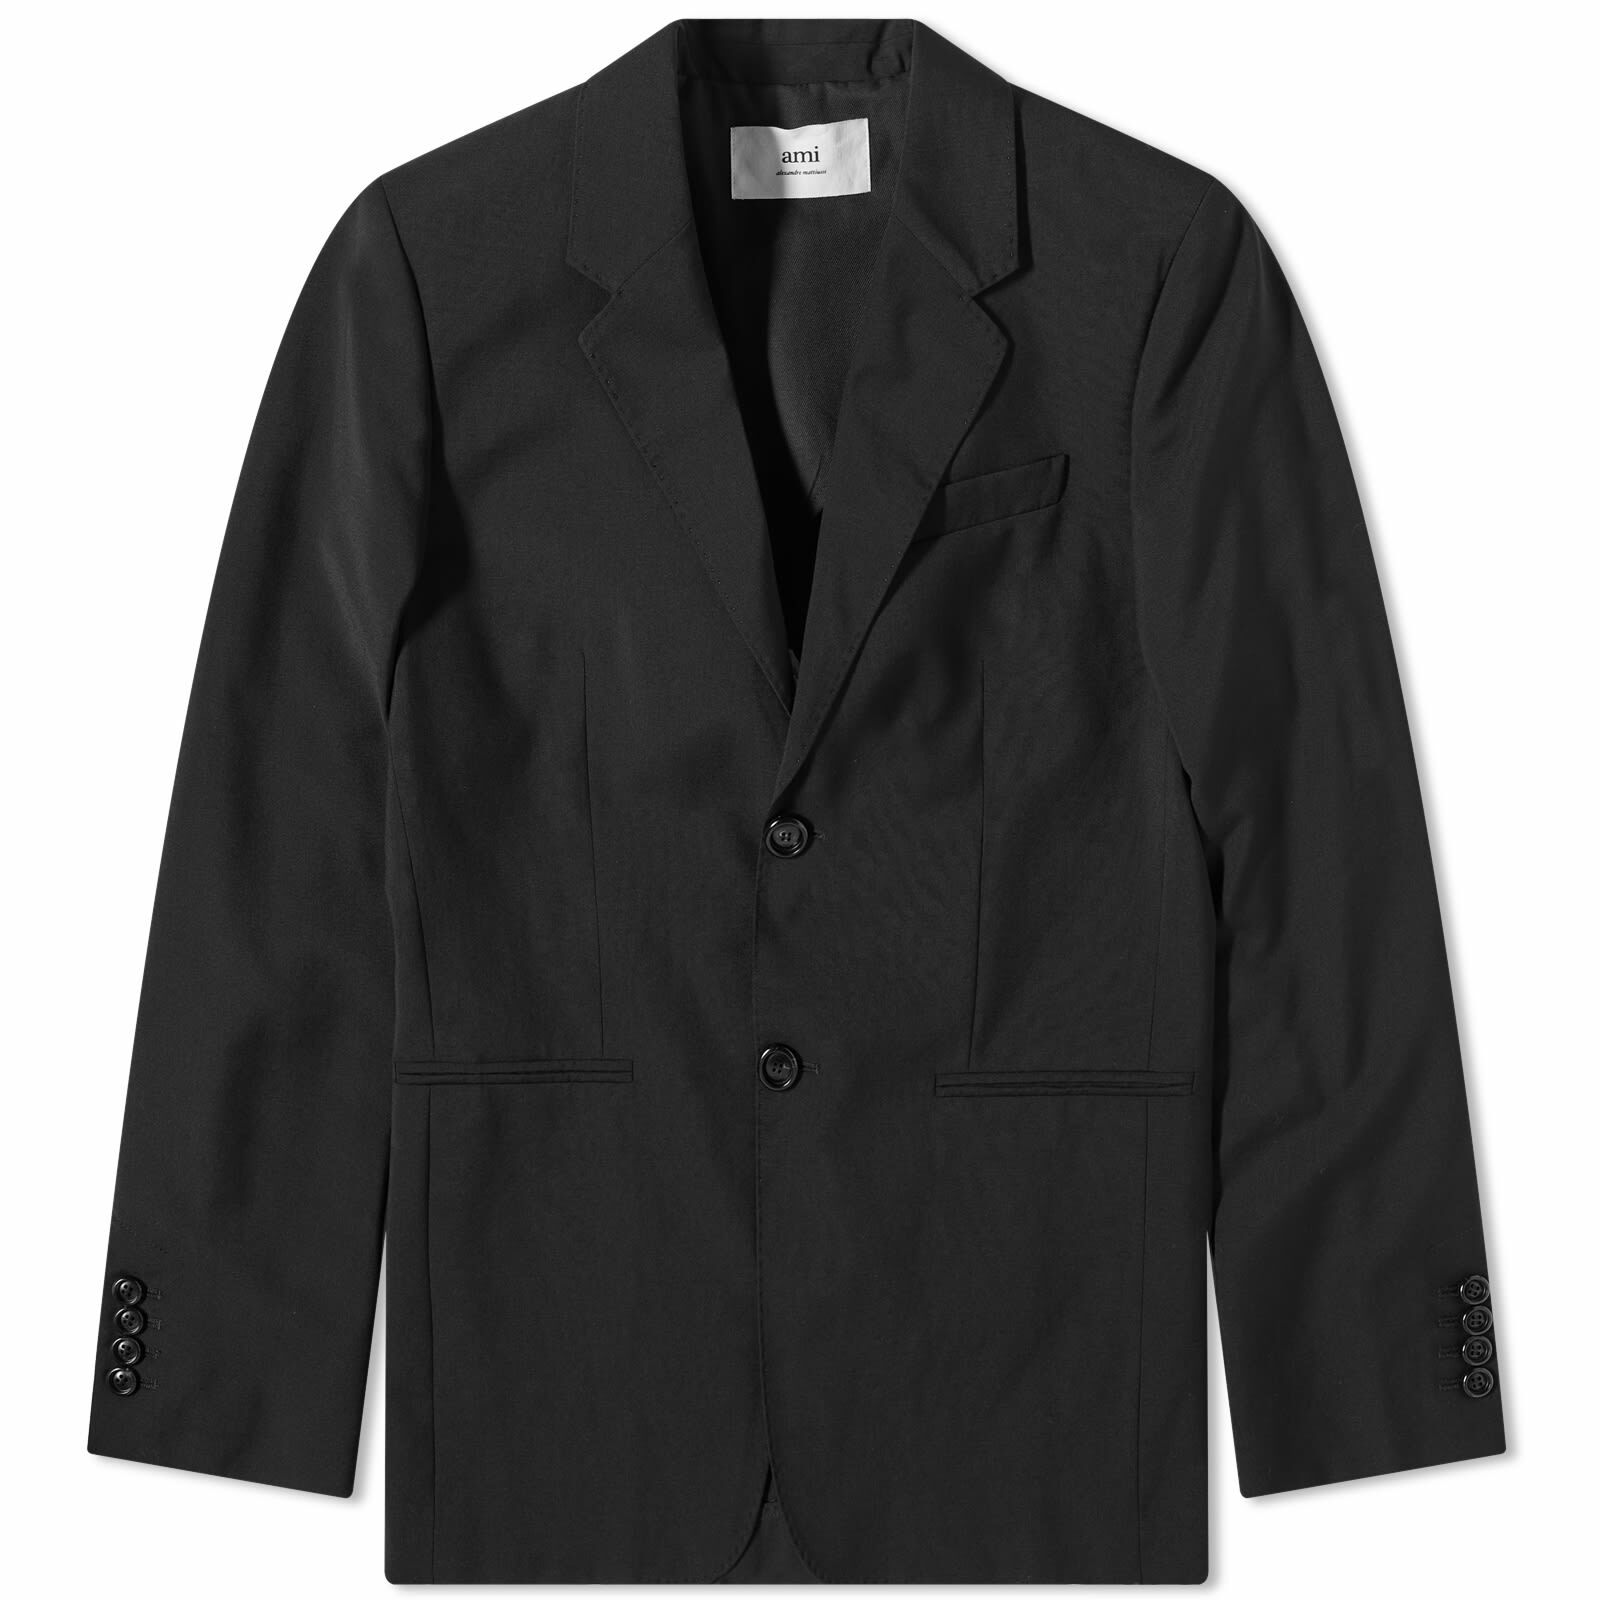 AMI Men's 2 Button Suit Jacket in Black AMI